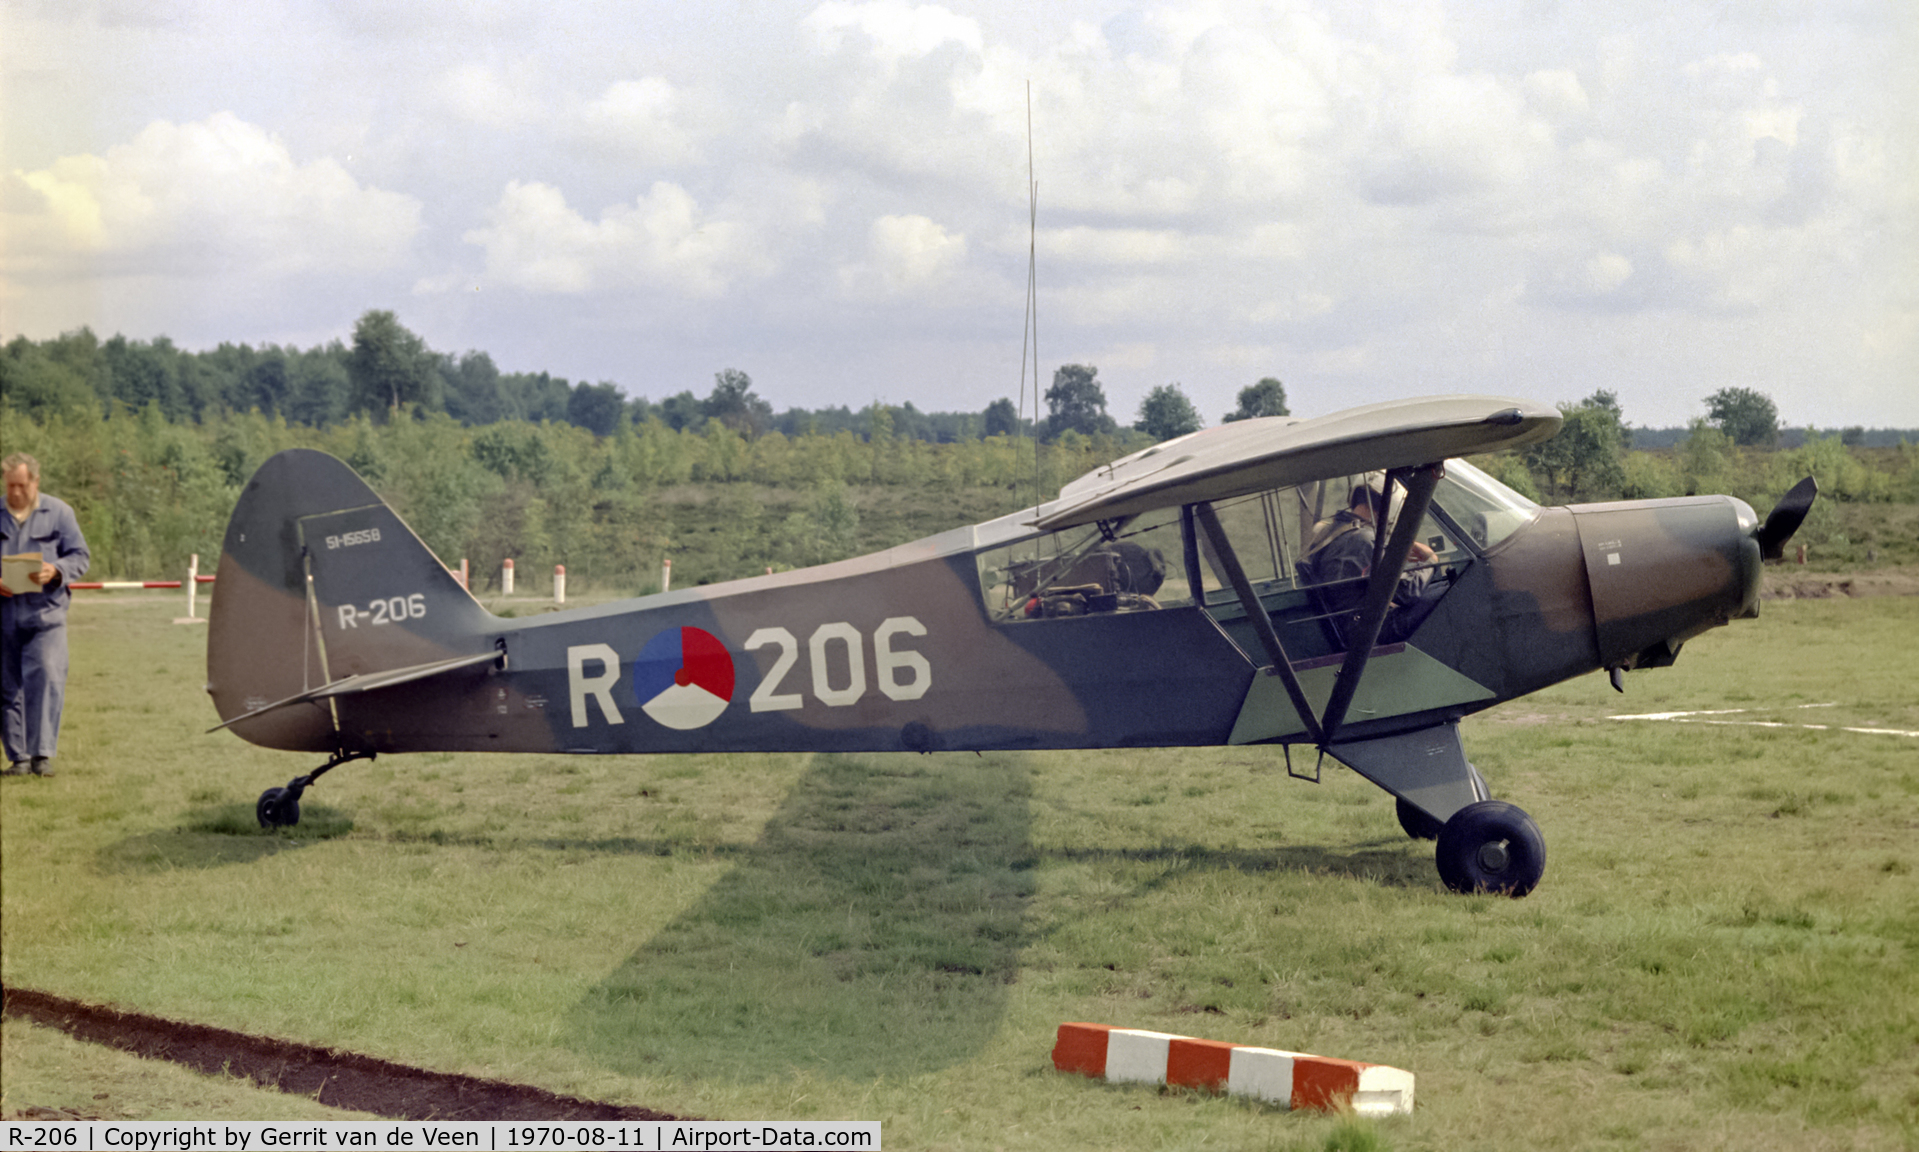 R-206, 1951 Piper L-21A Super Cub (PA-18-125) C/N 18-575, a nice colourphoto shot at Ermelo LAS